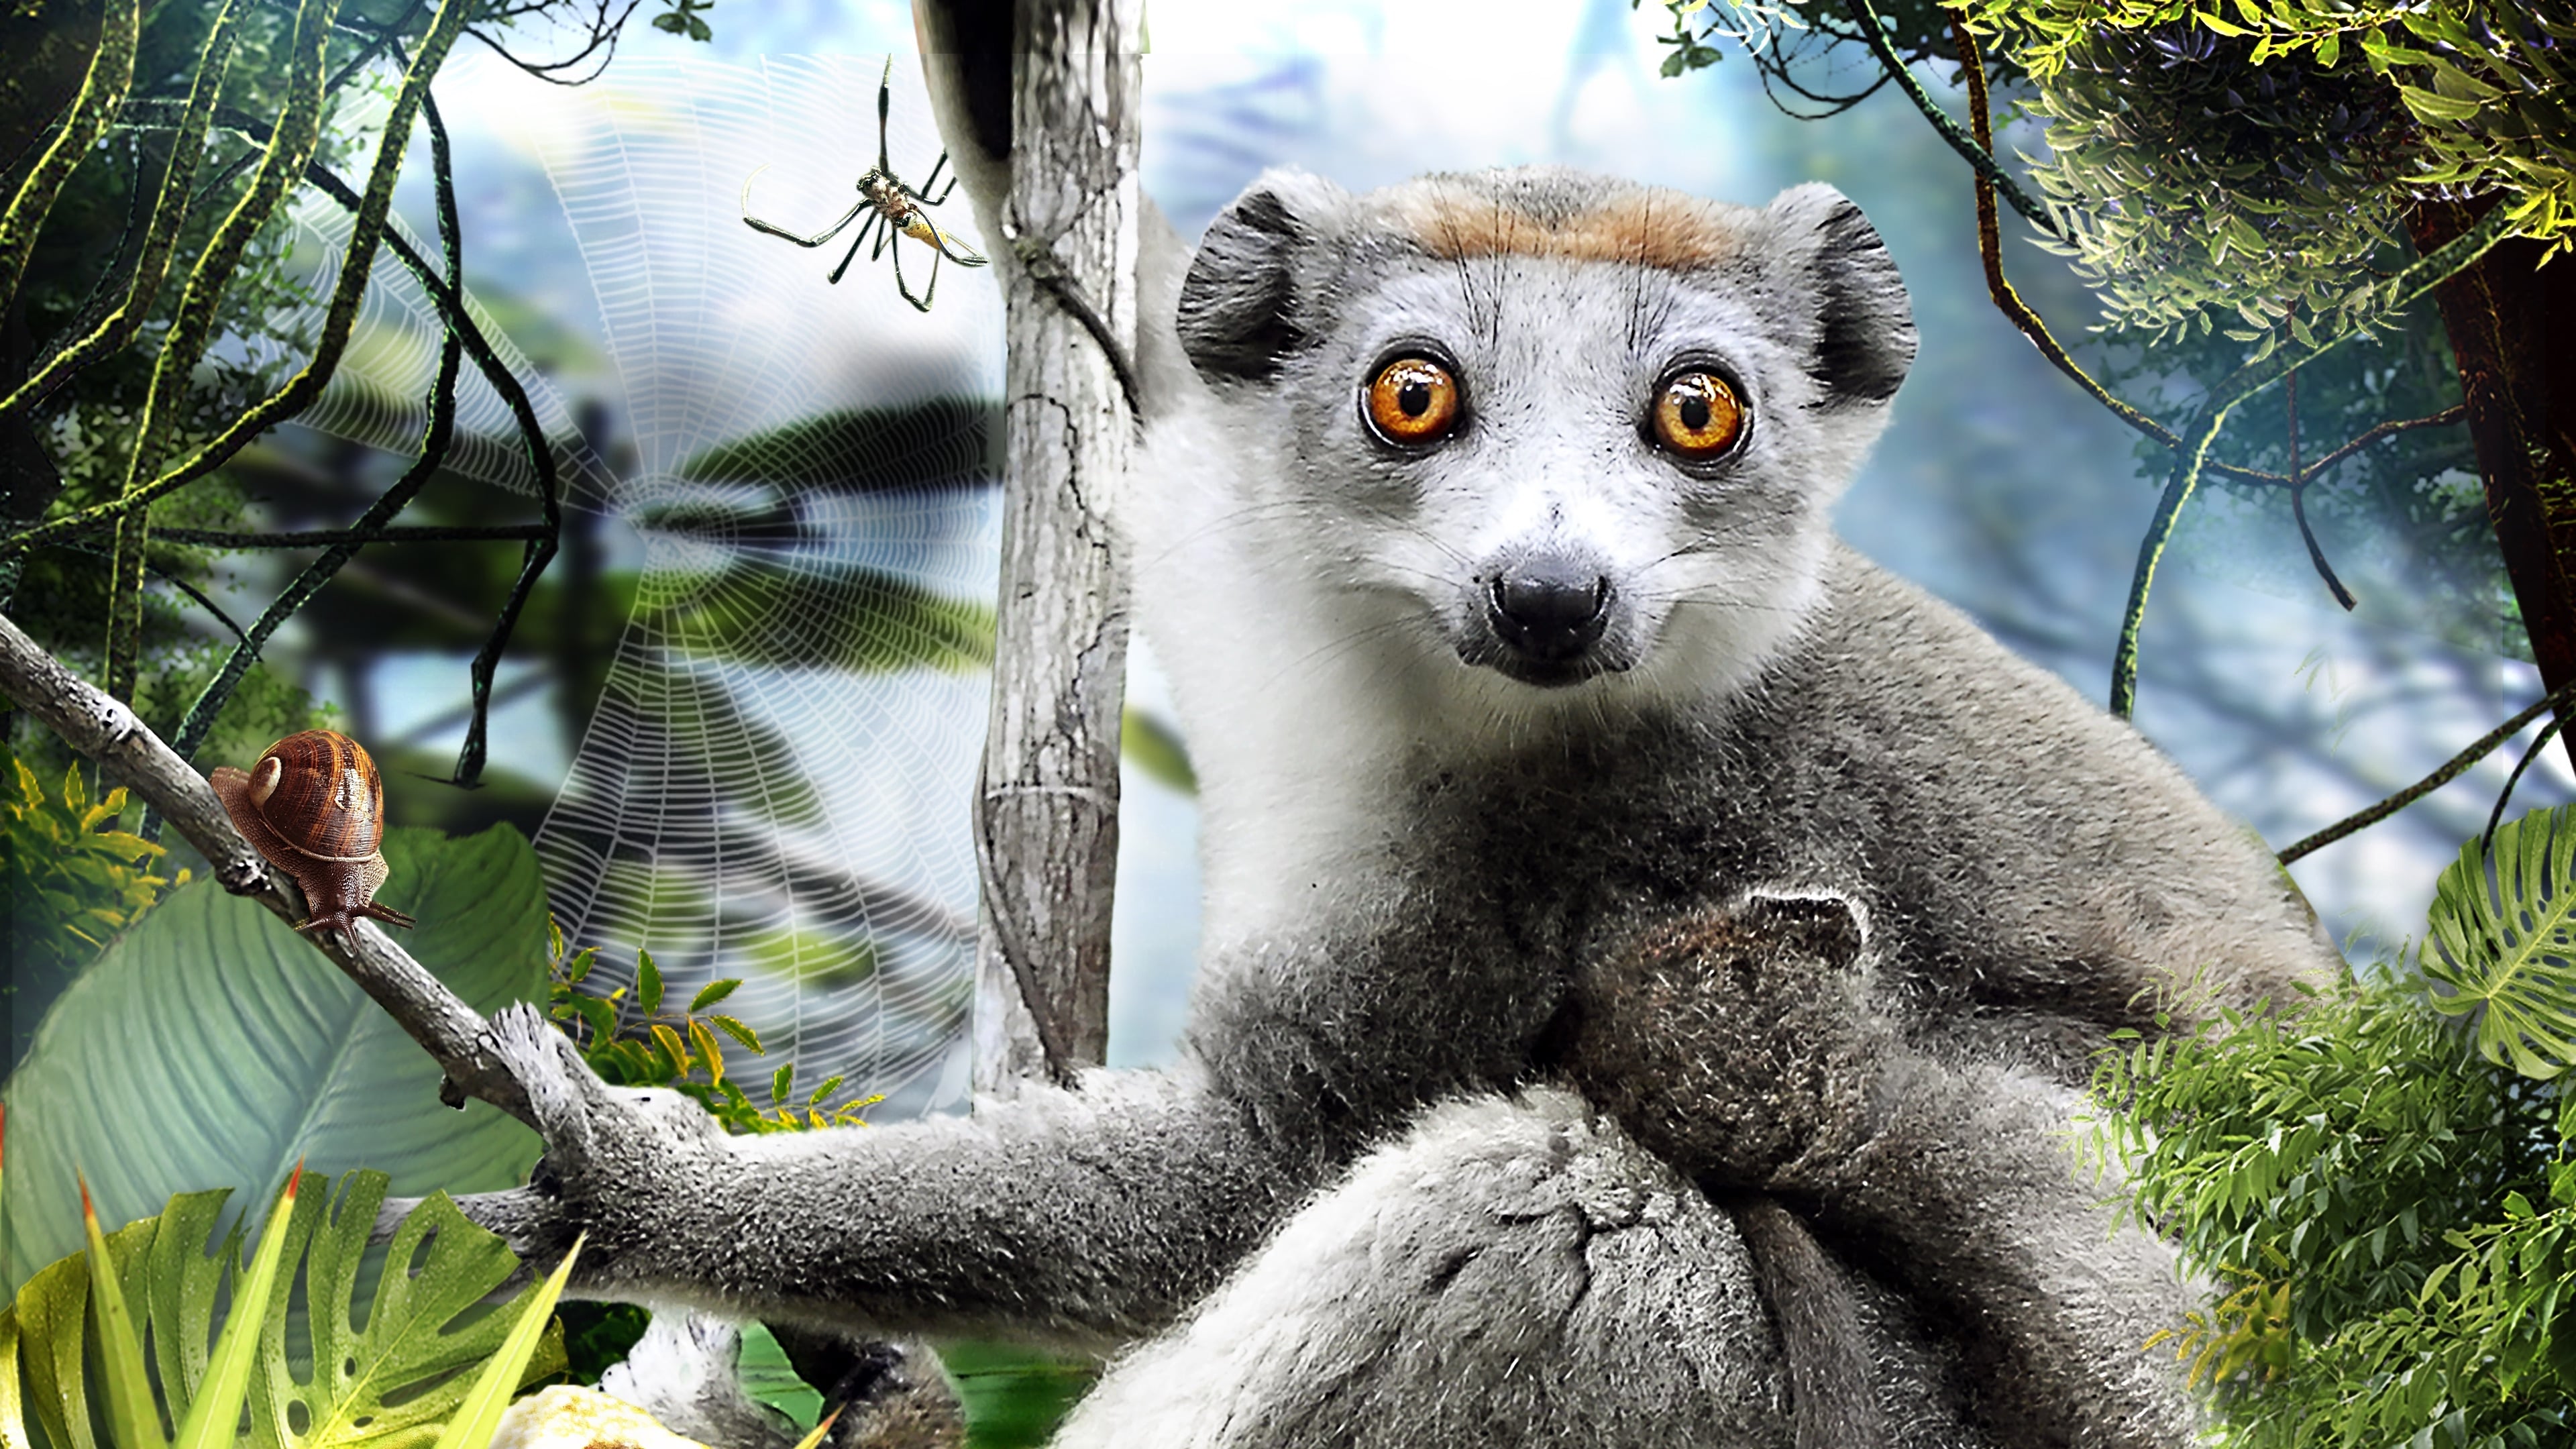 Madagascar 3D